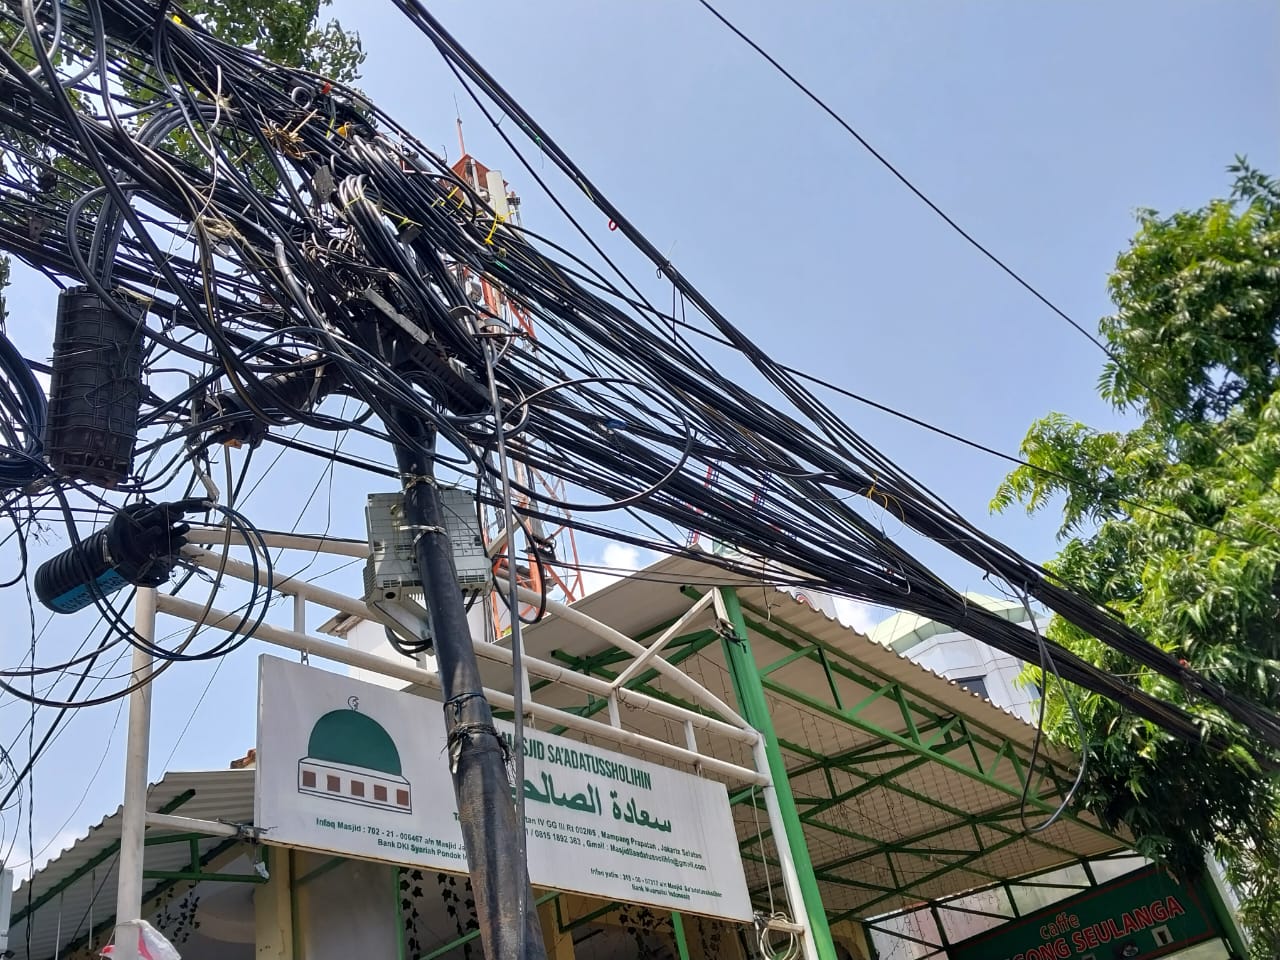 Dinas Bina Marga Targetkan Kabel Semrawut di Jakarta Selesai 2 Minggu